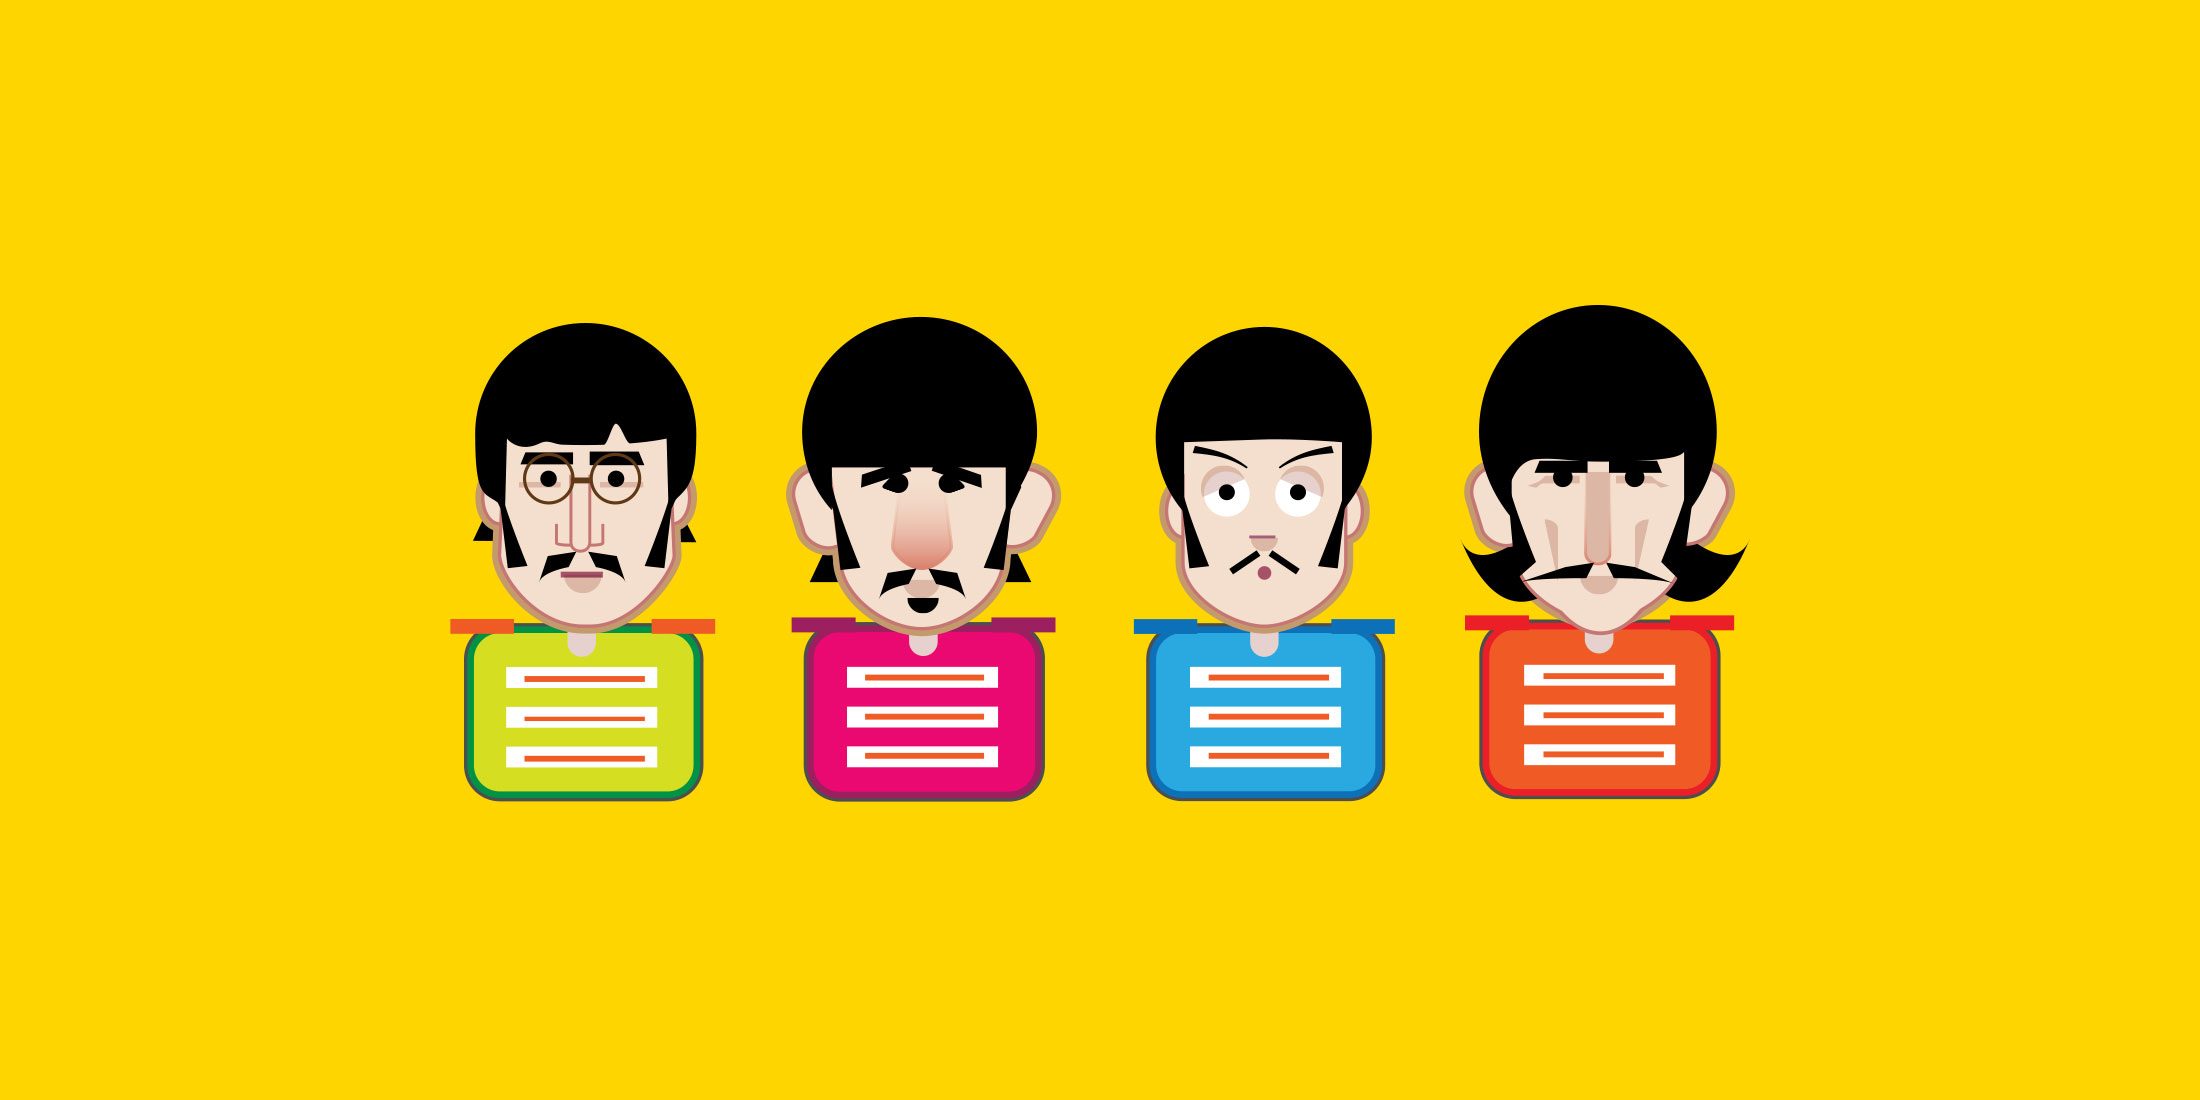 emoji-beatles-illustration-for-campaigns